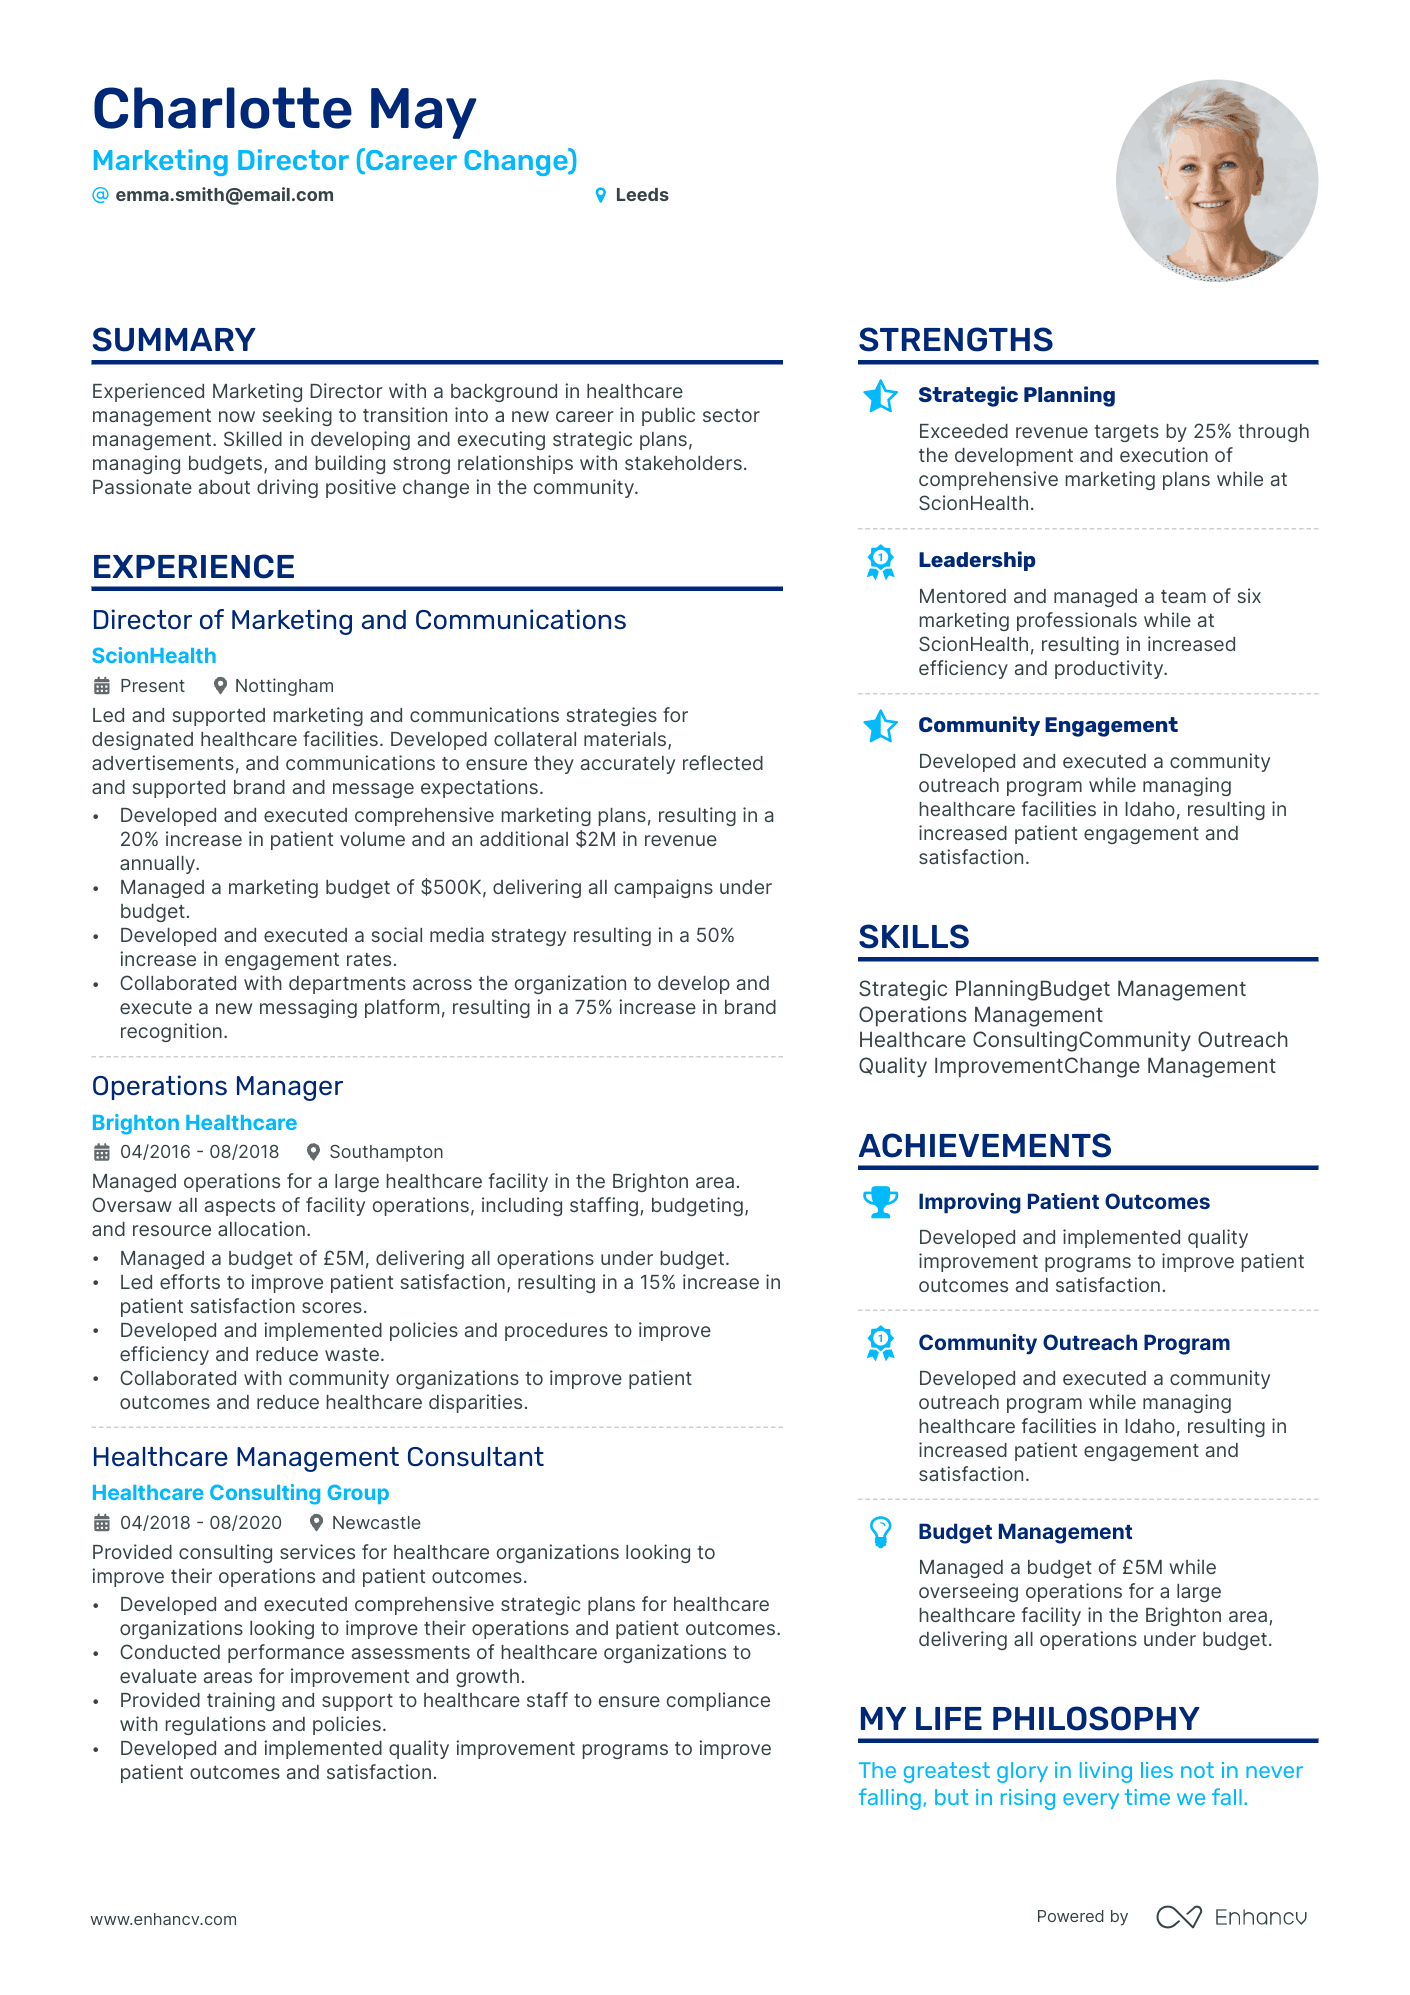 Marketing Director (Career Change) CV example